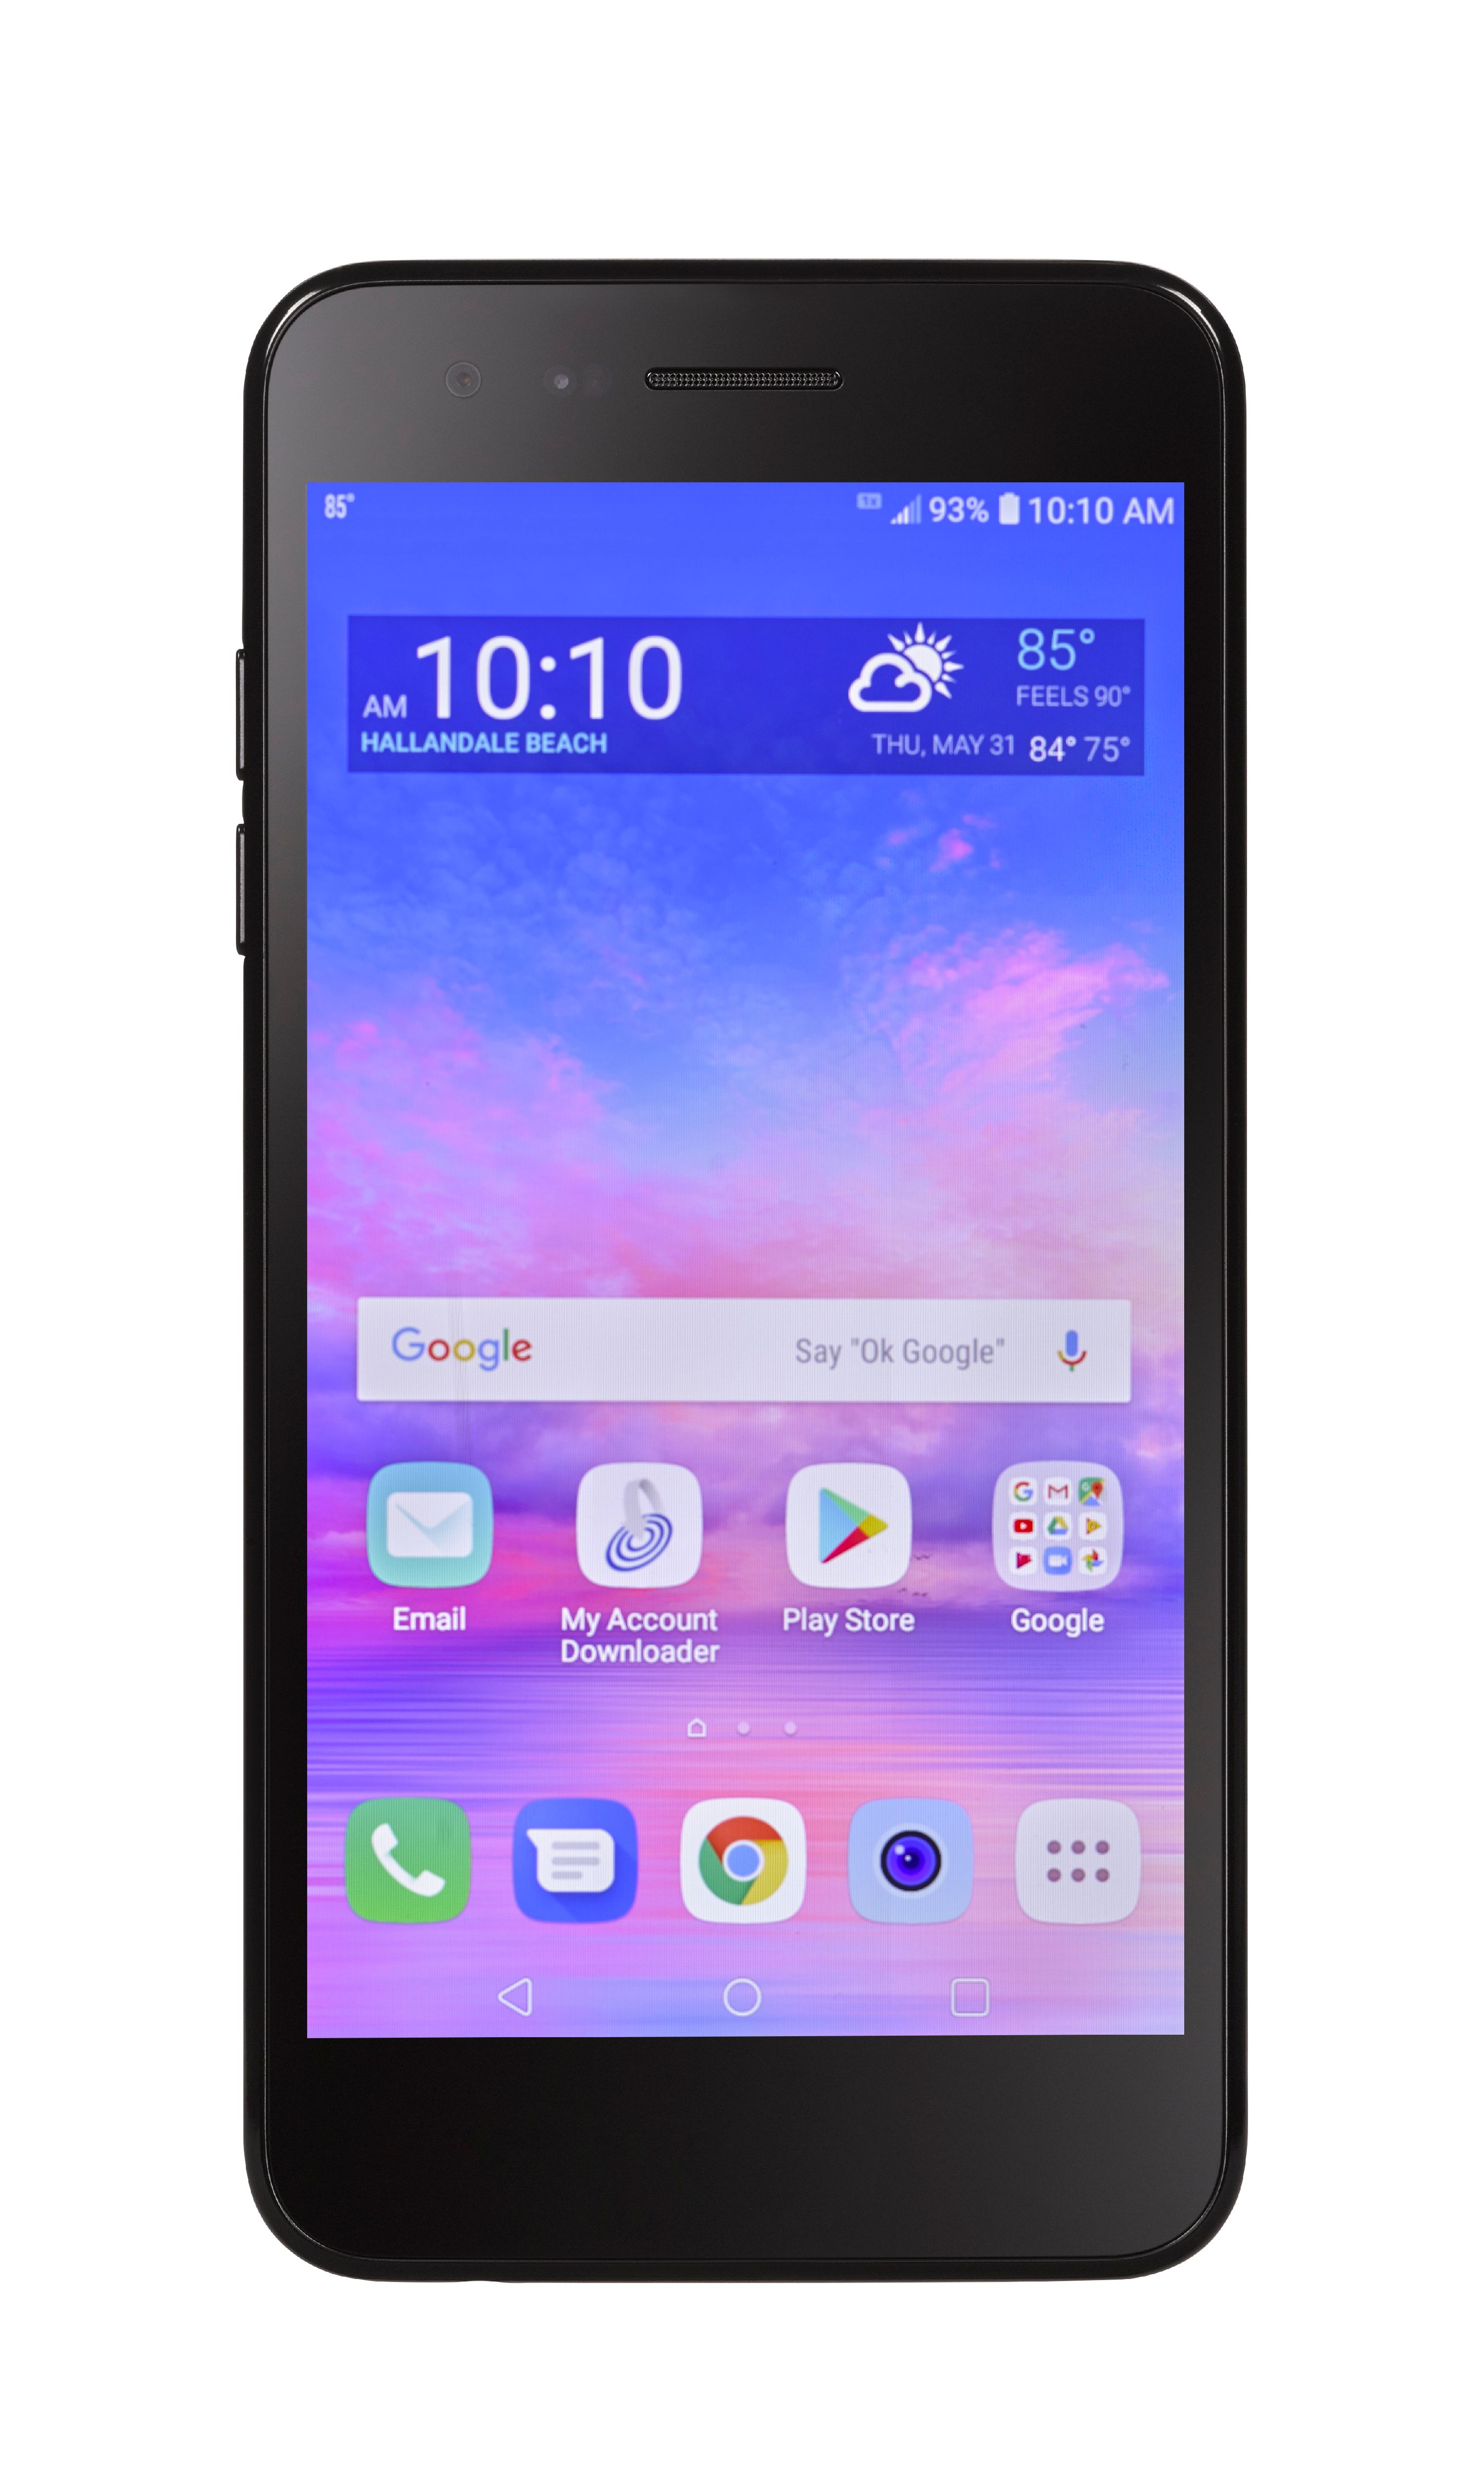 Simple Mobile LG Rebel 4 Prepaid Smartphone - image 1 of 11